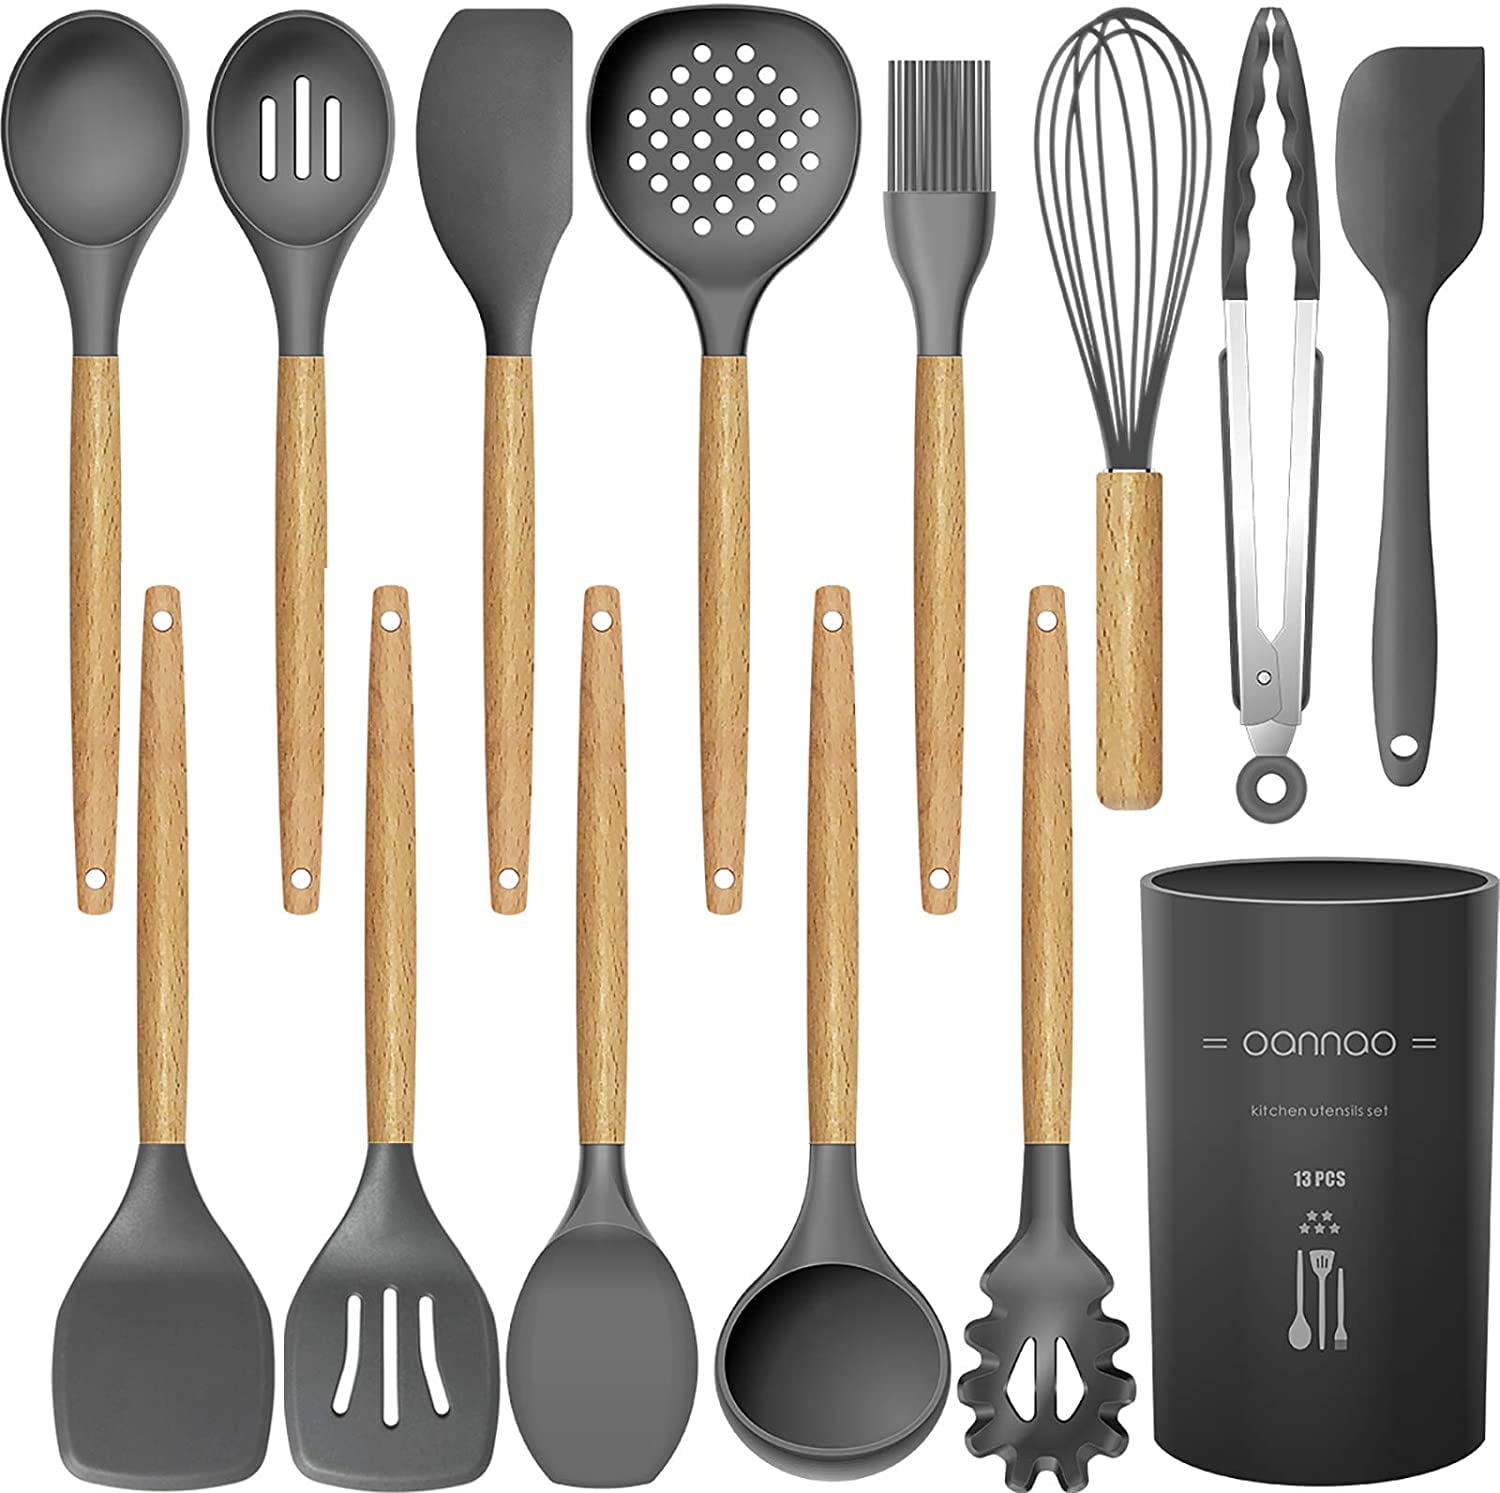 aothod Silicone Cooking Utensils Set - 446f Heat Resistant Kitchen Utensils,Turner tongs,spatula,spoon,brush,whisk,kitchen Utensil G